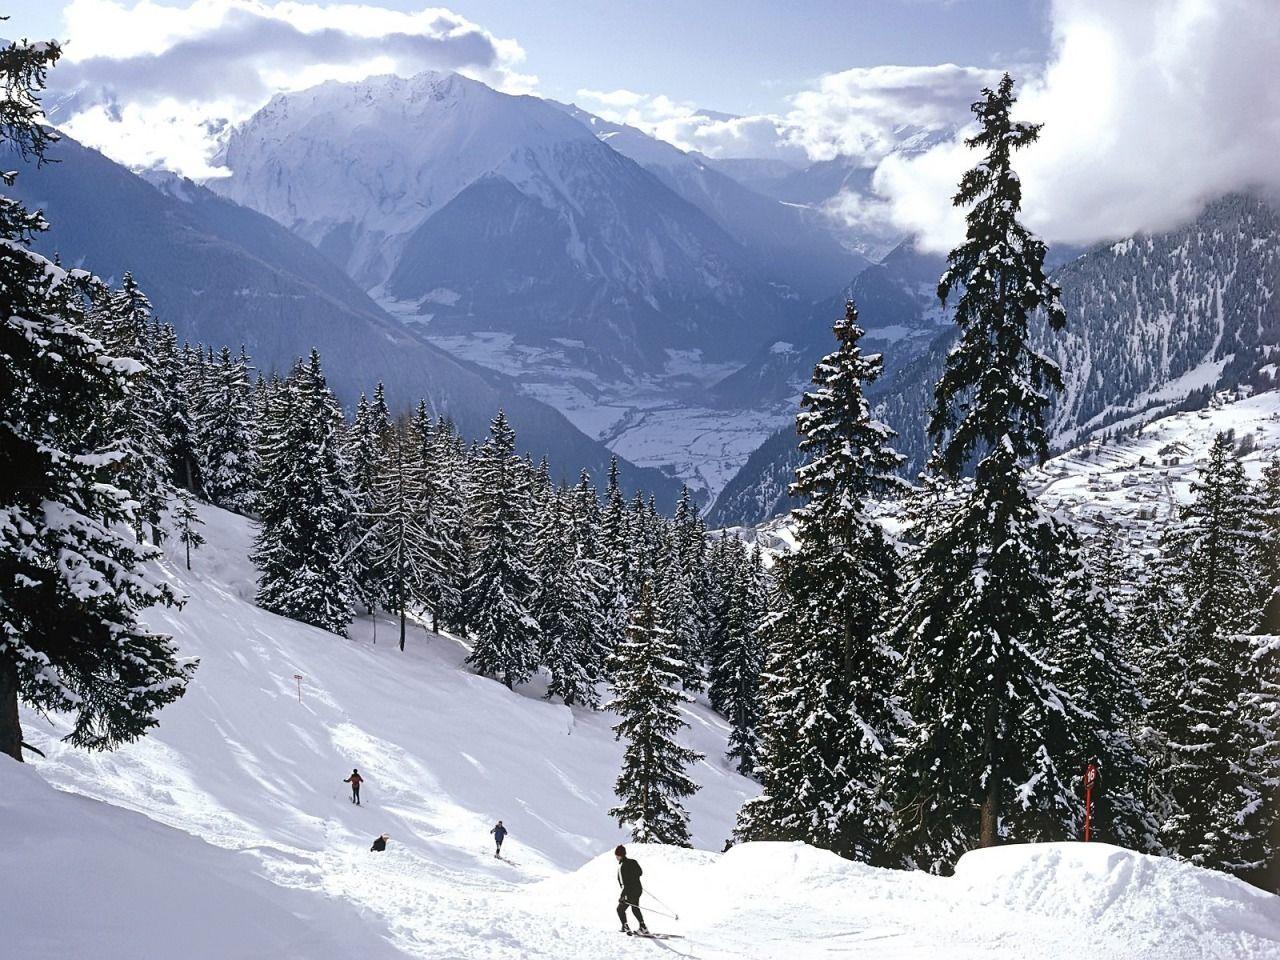 Skiing Wallpaper Ski Sports Wallpaper in jpg format for free download